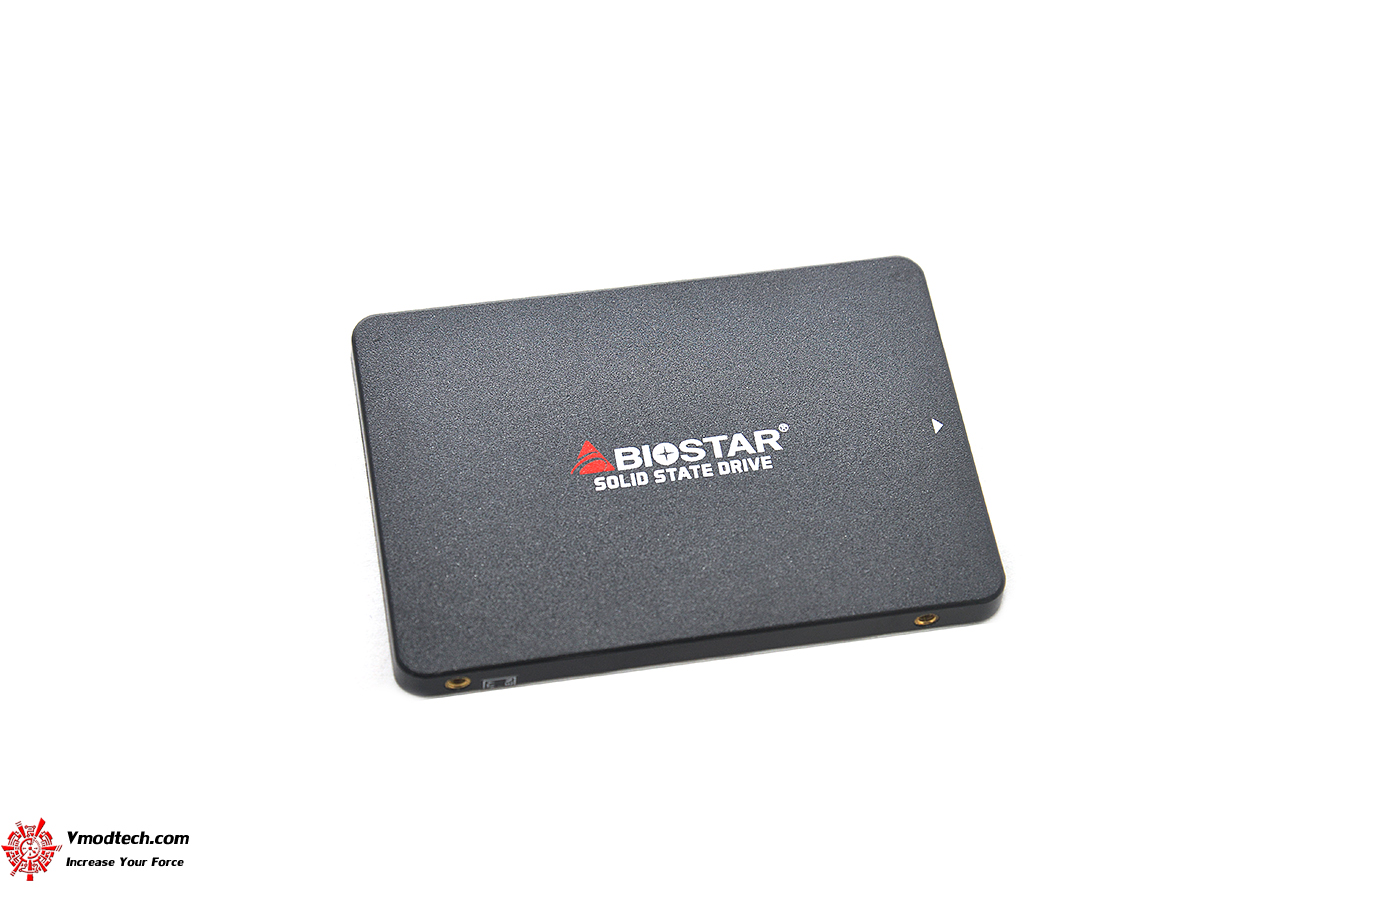 dsc 9927 Biostar SSD S130 512GB Review